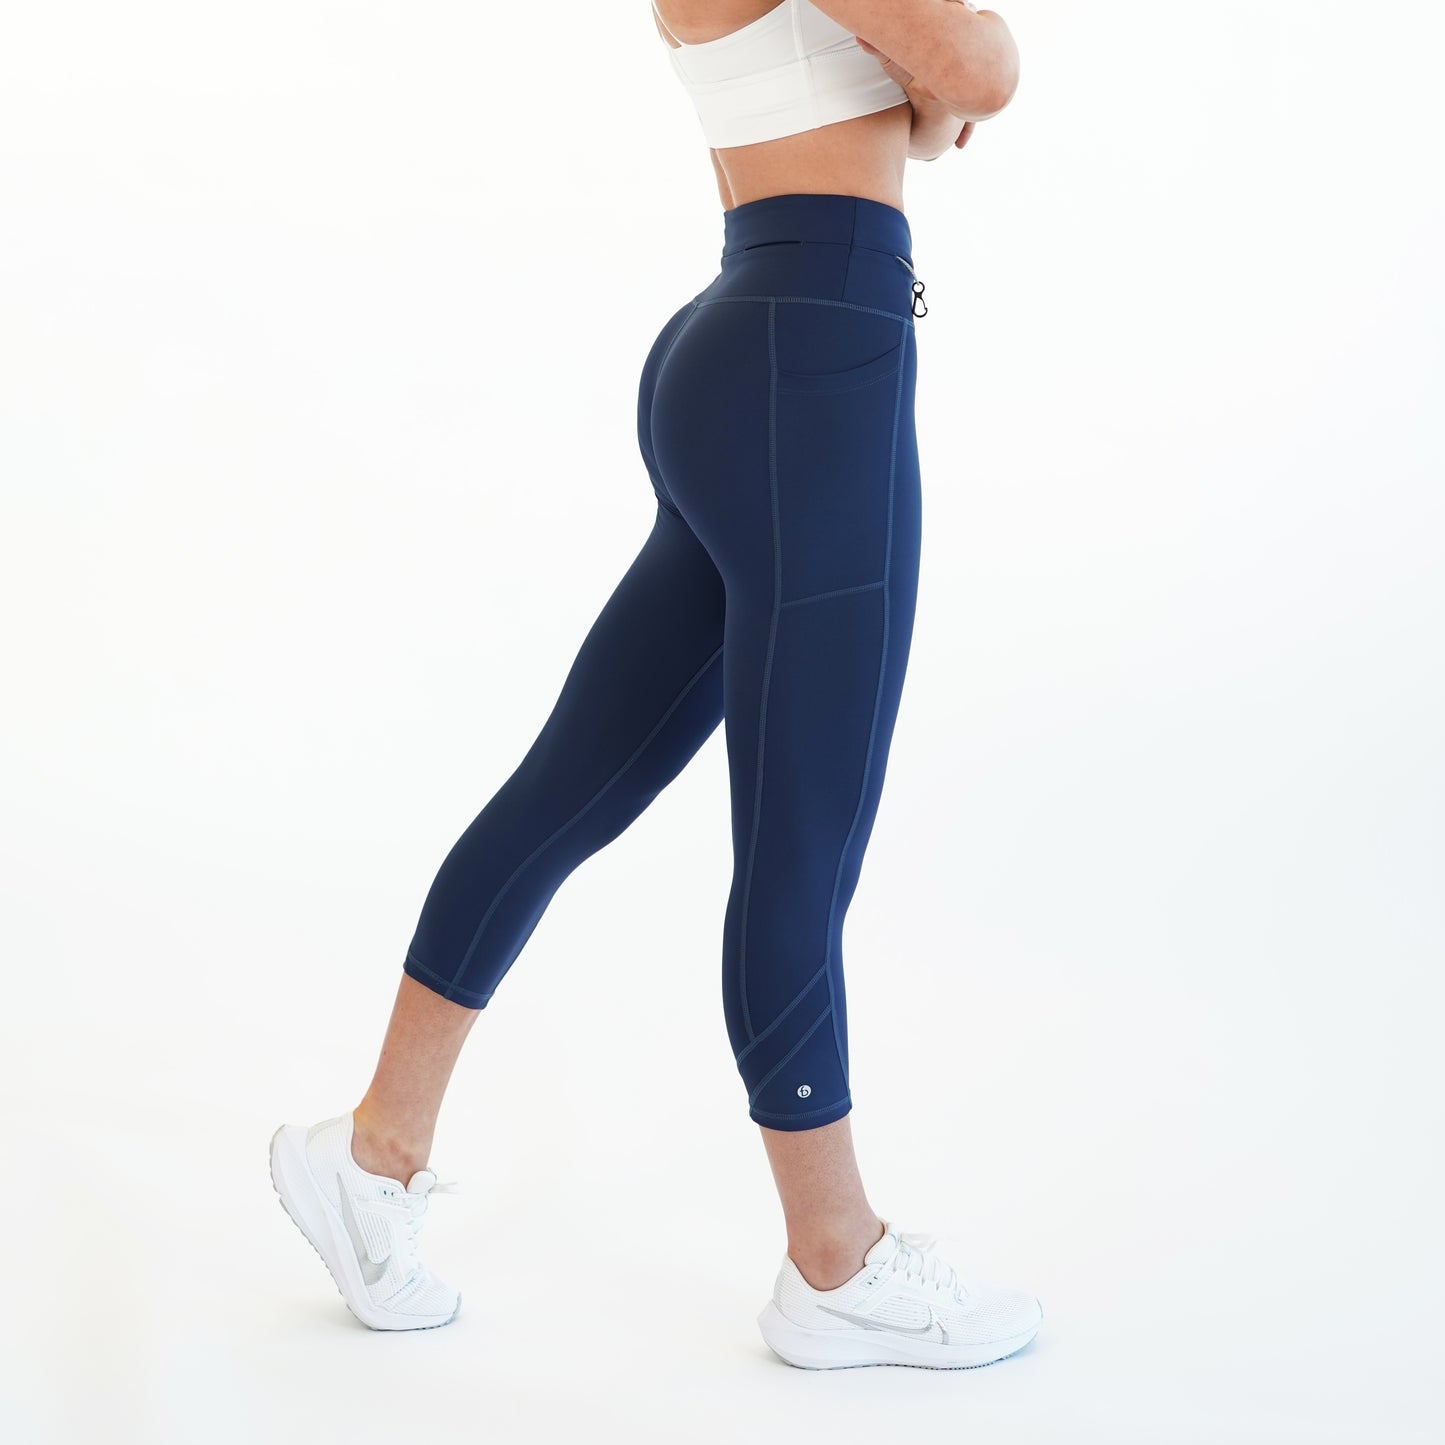 Lululemon Leggings Women’s Blue Cropped Size 8 With Side Pockets